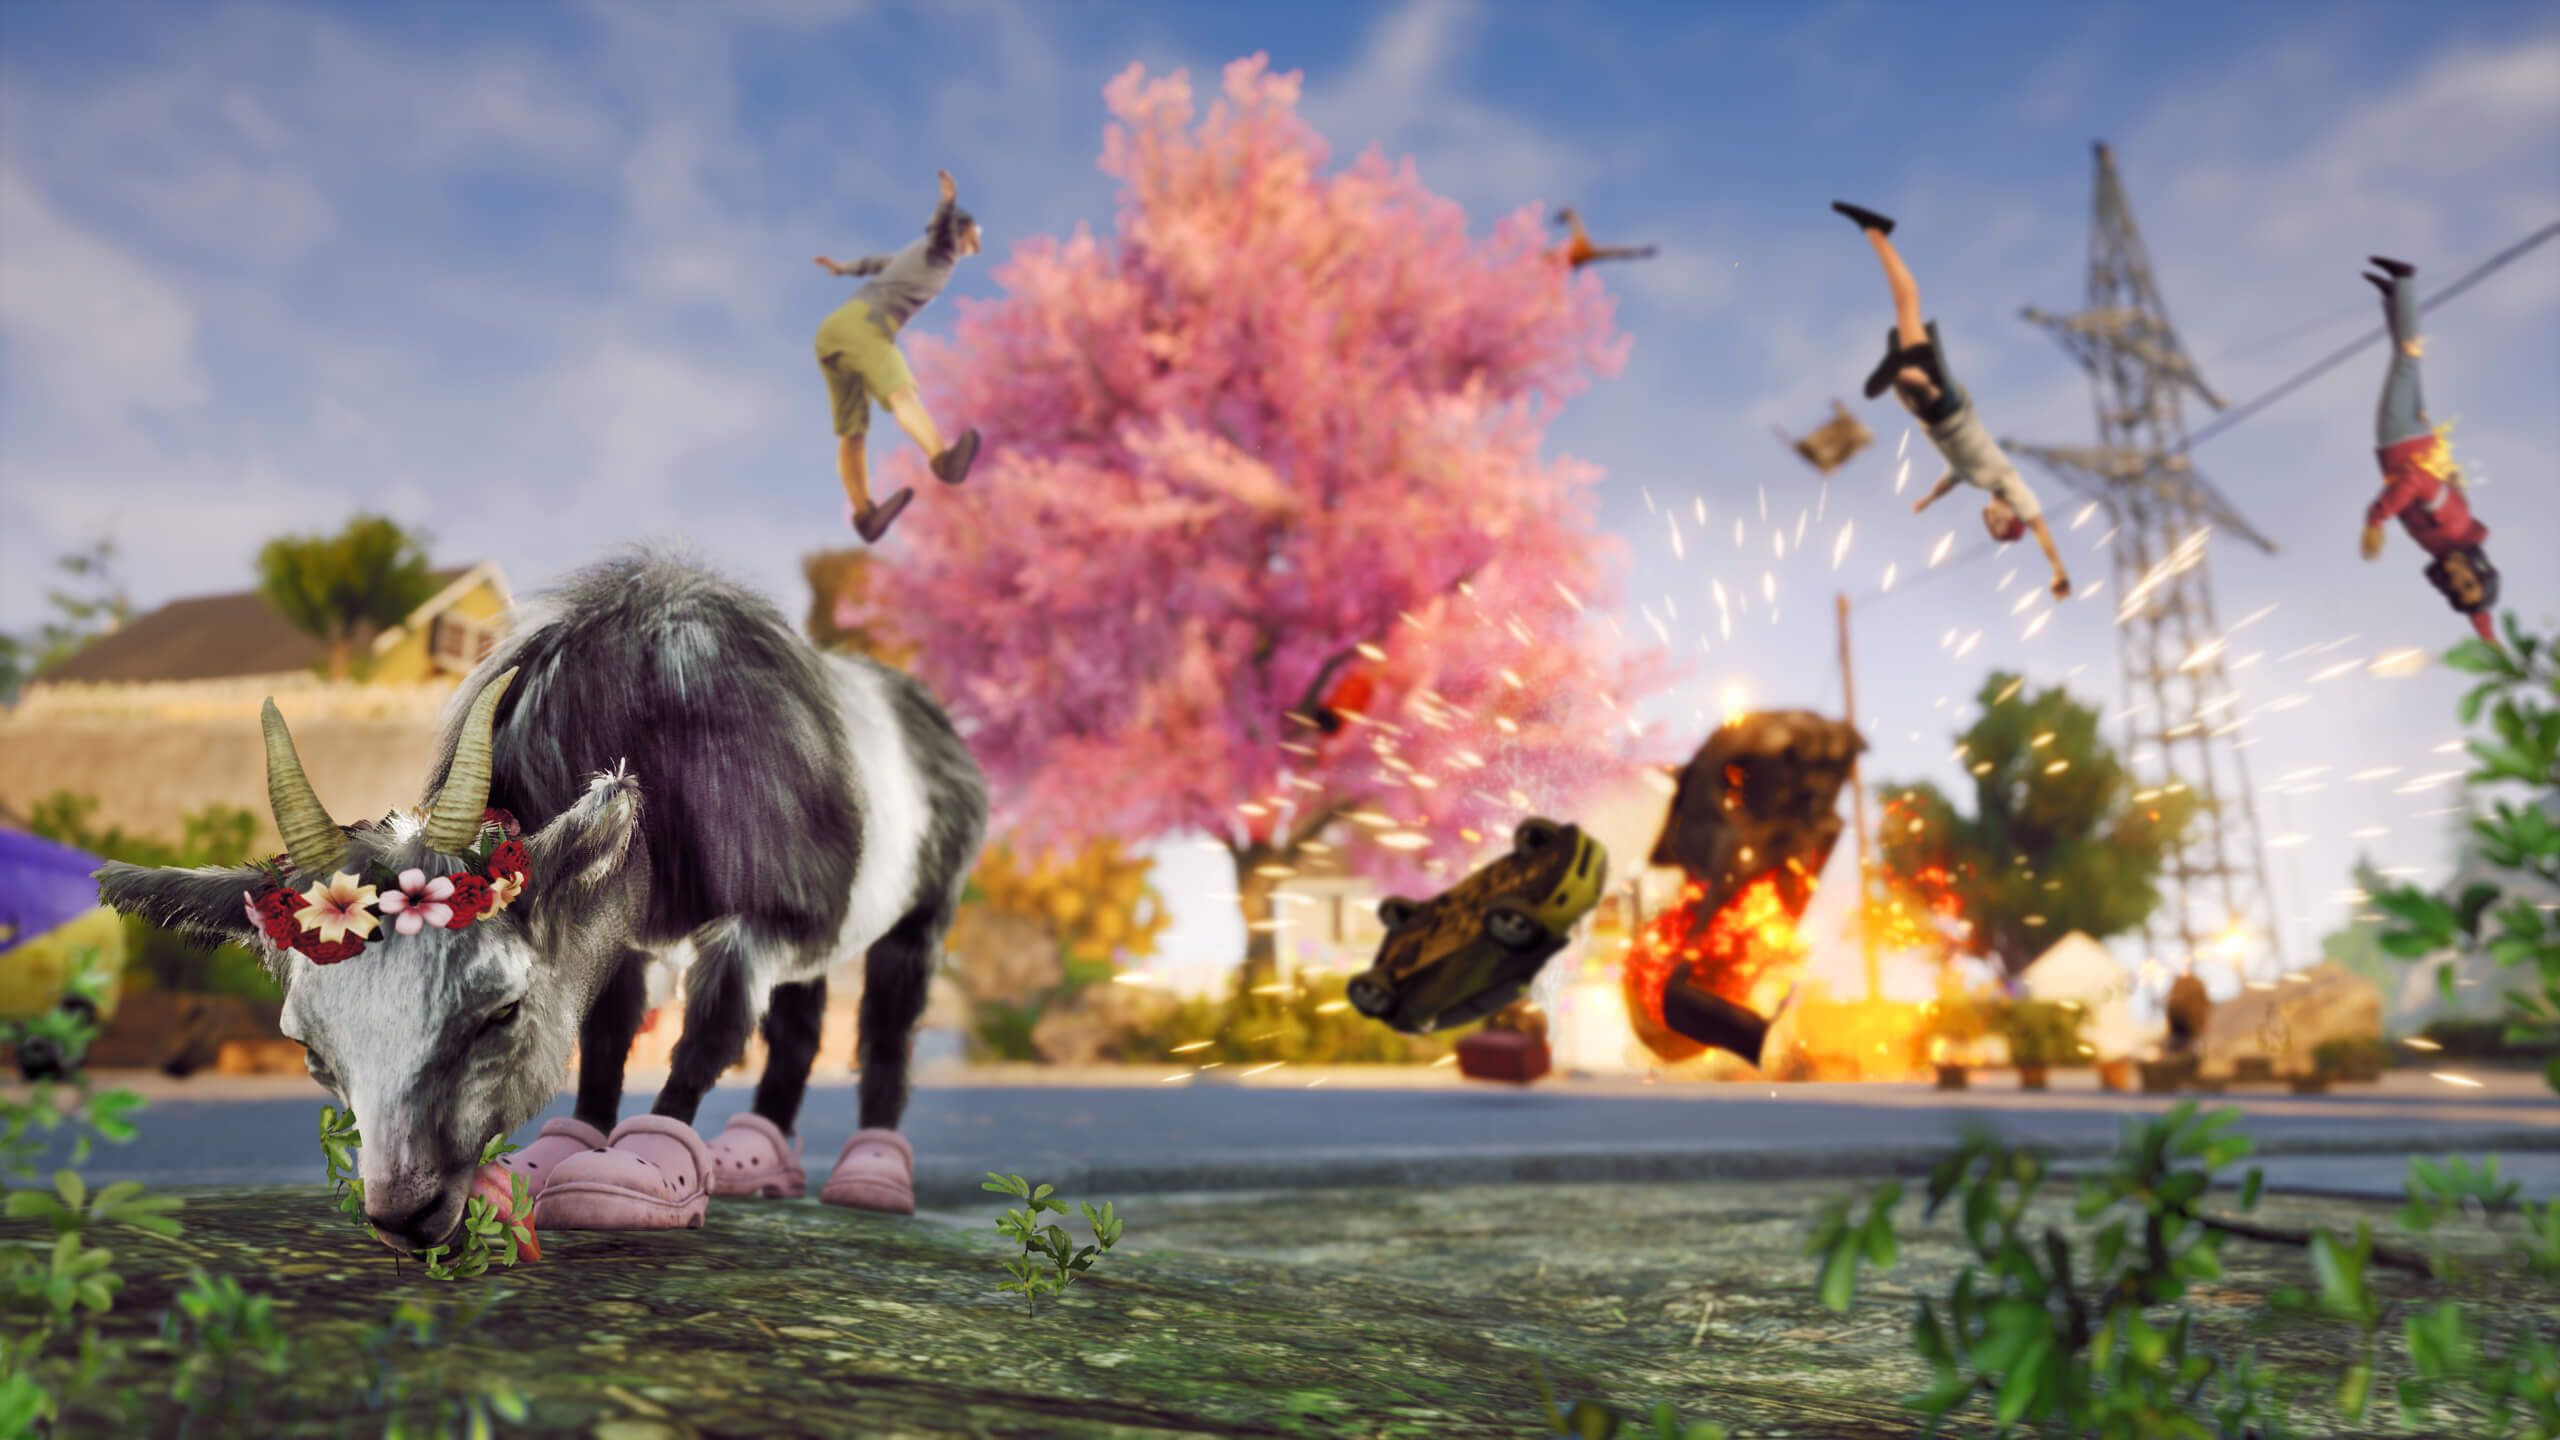 GTA 6: Rockstar Games Owner, Take-Two Takes Down Goat Simulator 3